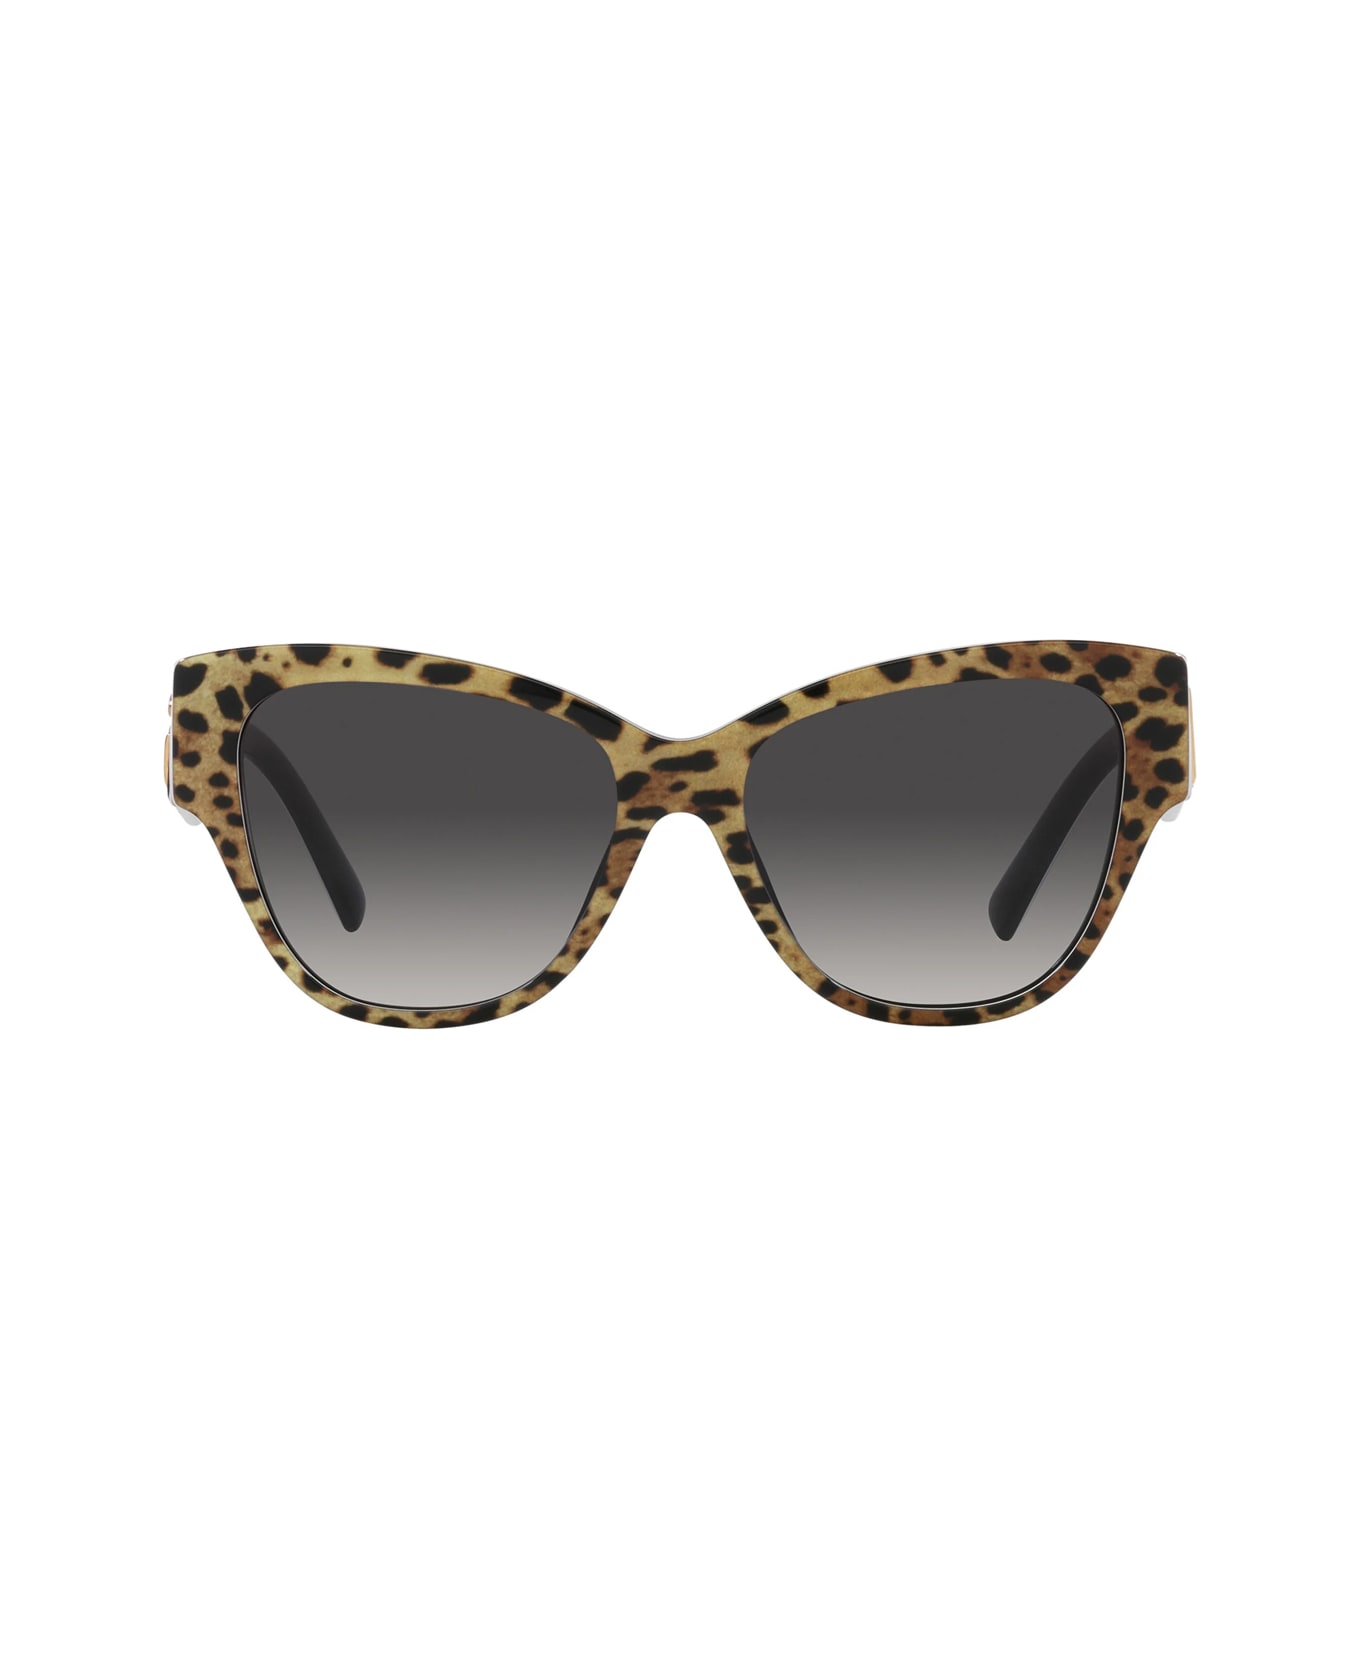 Dolce & Gabbana Eyewear Dg4449 31638g Sunglasses - Beige